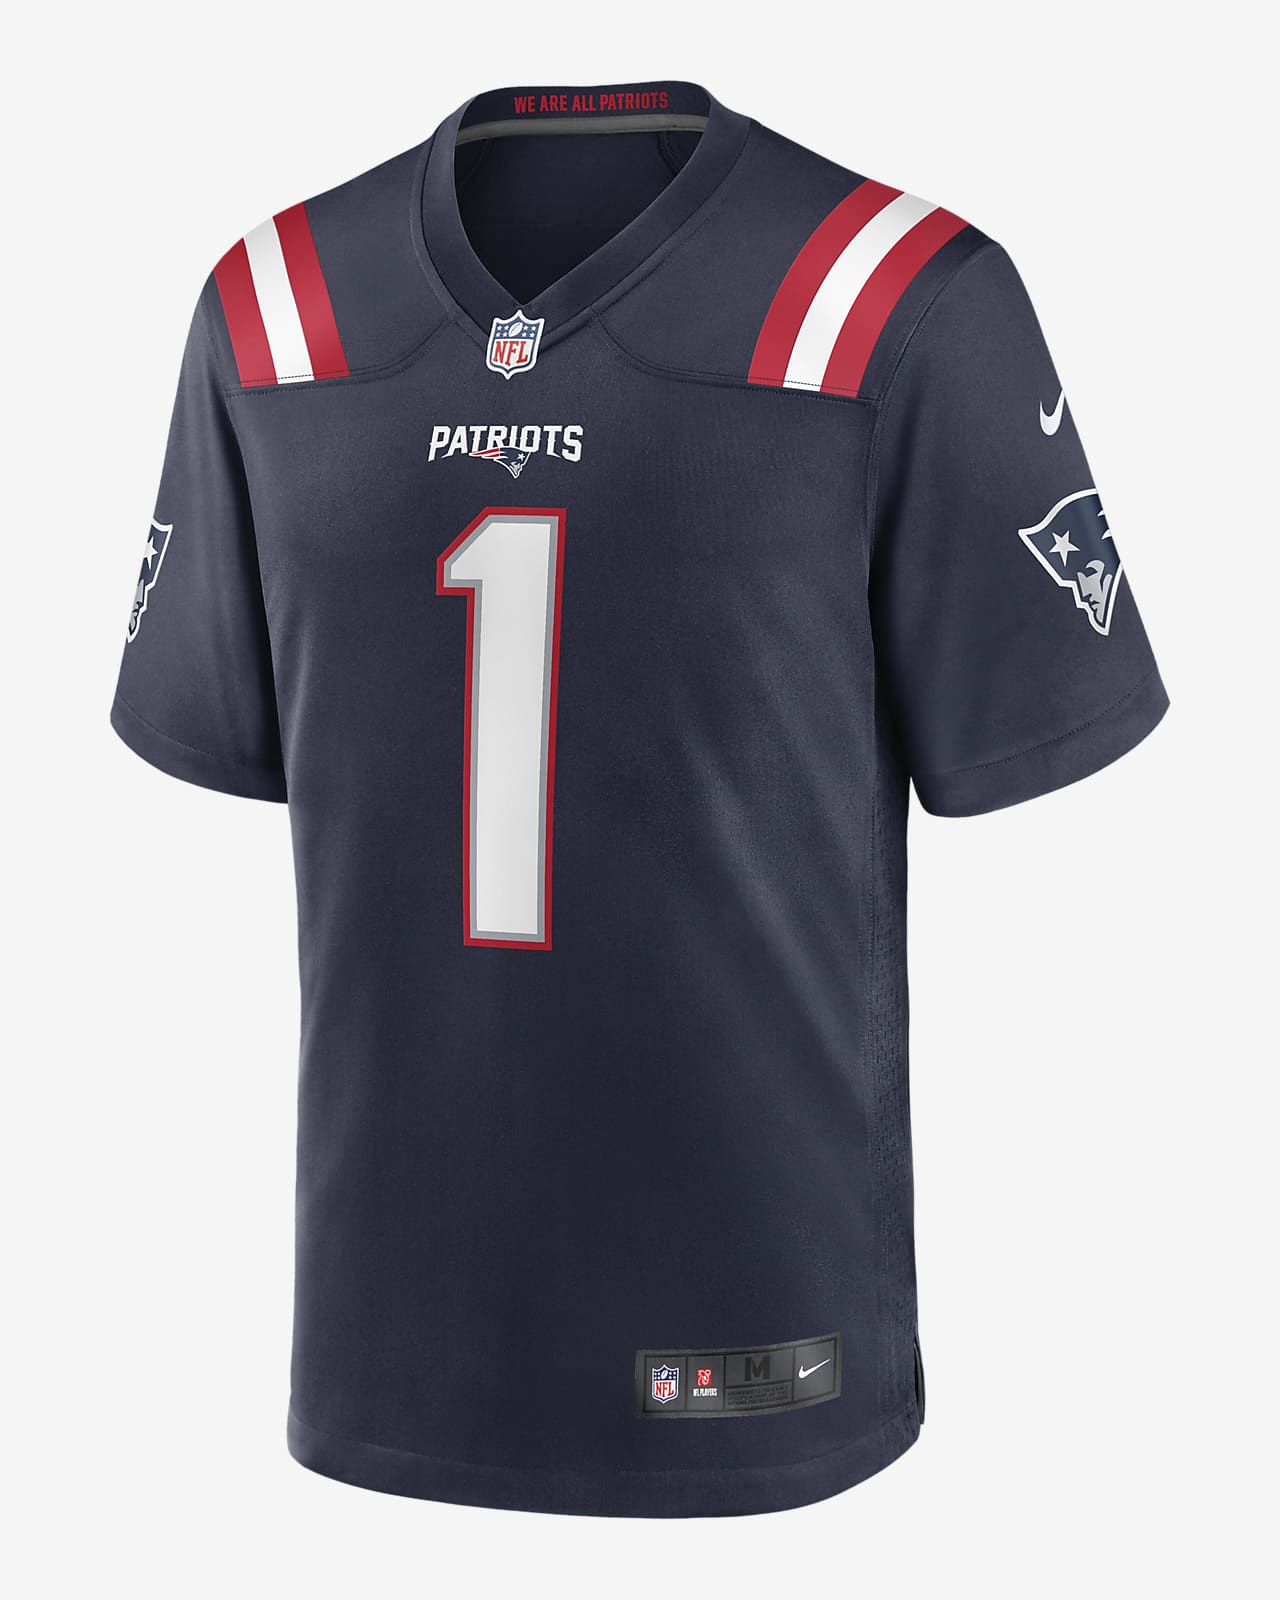 NFL New England Patriots (Rob Gronkowski) American-Football-Spieltrikot für Herren